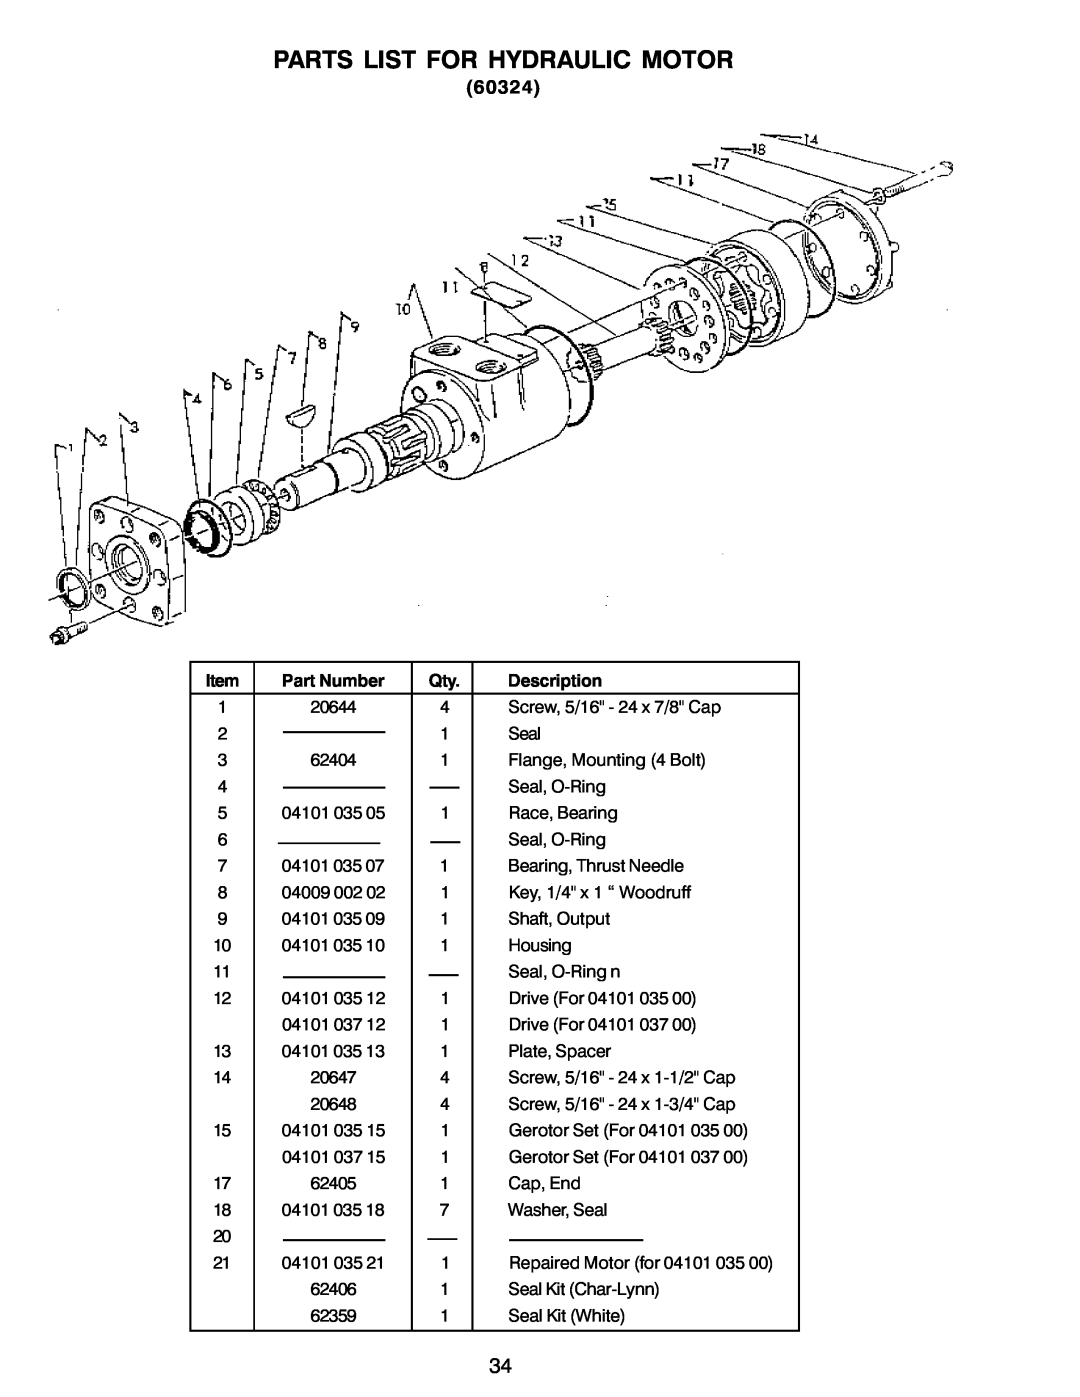 Power Acoustik M-940, M-944, M-1044 instruction manual Parts List For Hydraulic Motor 